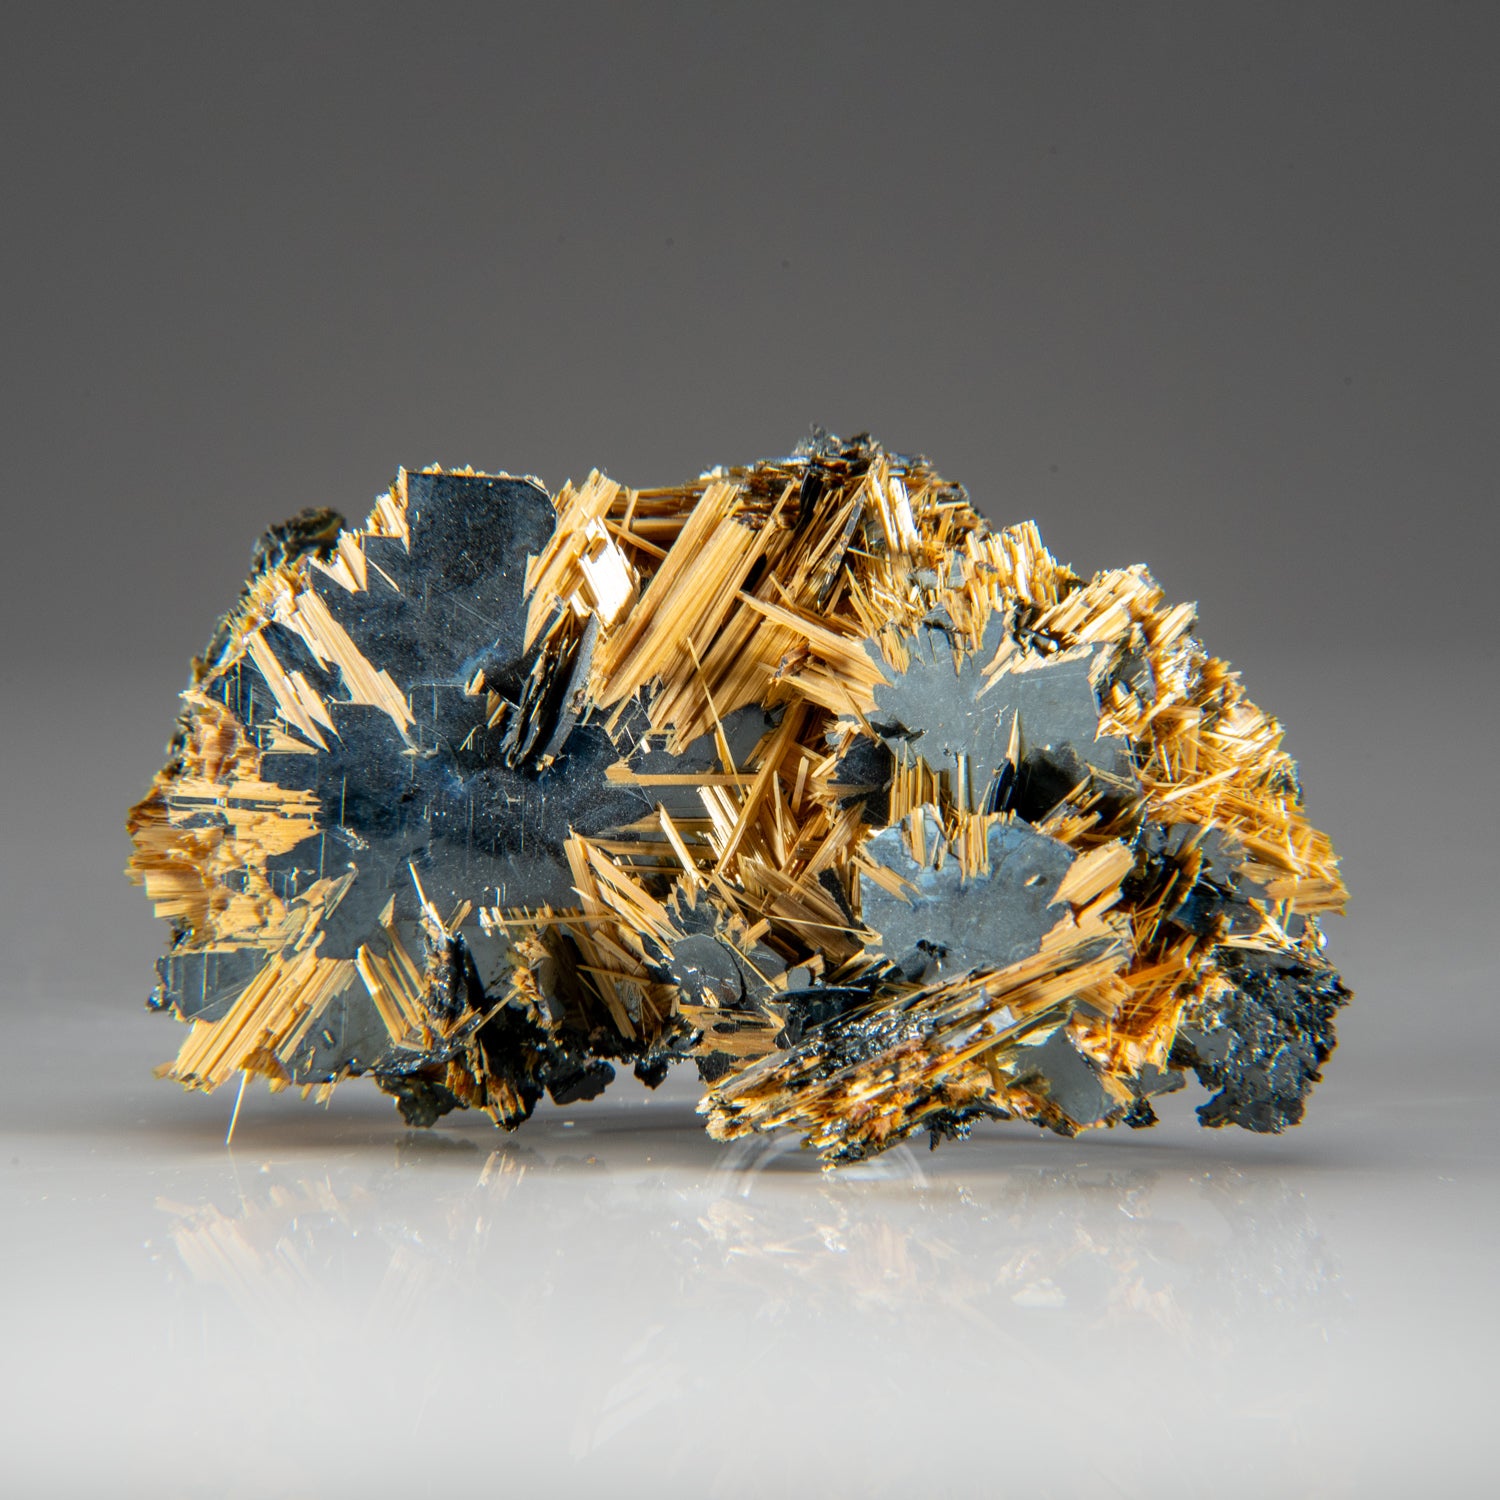 Rutile on Hematite Crystal from Novo Horozonte